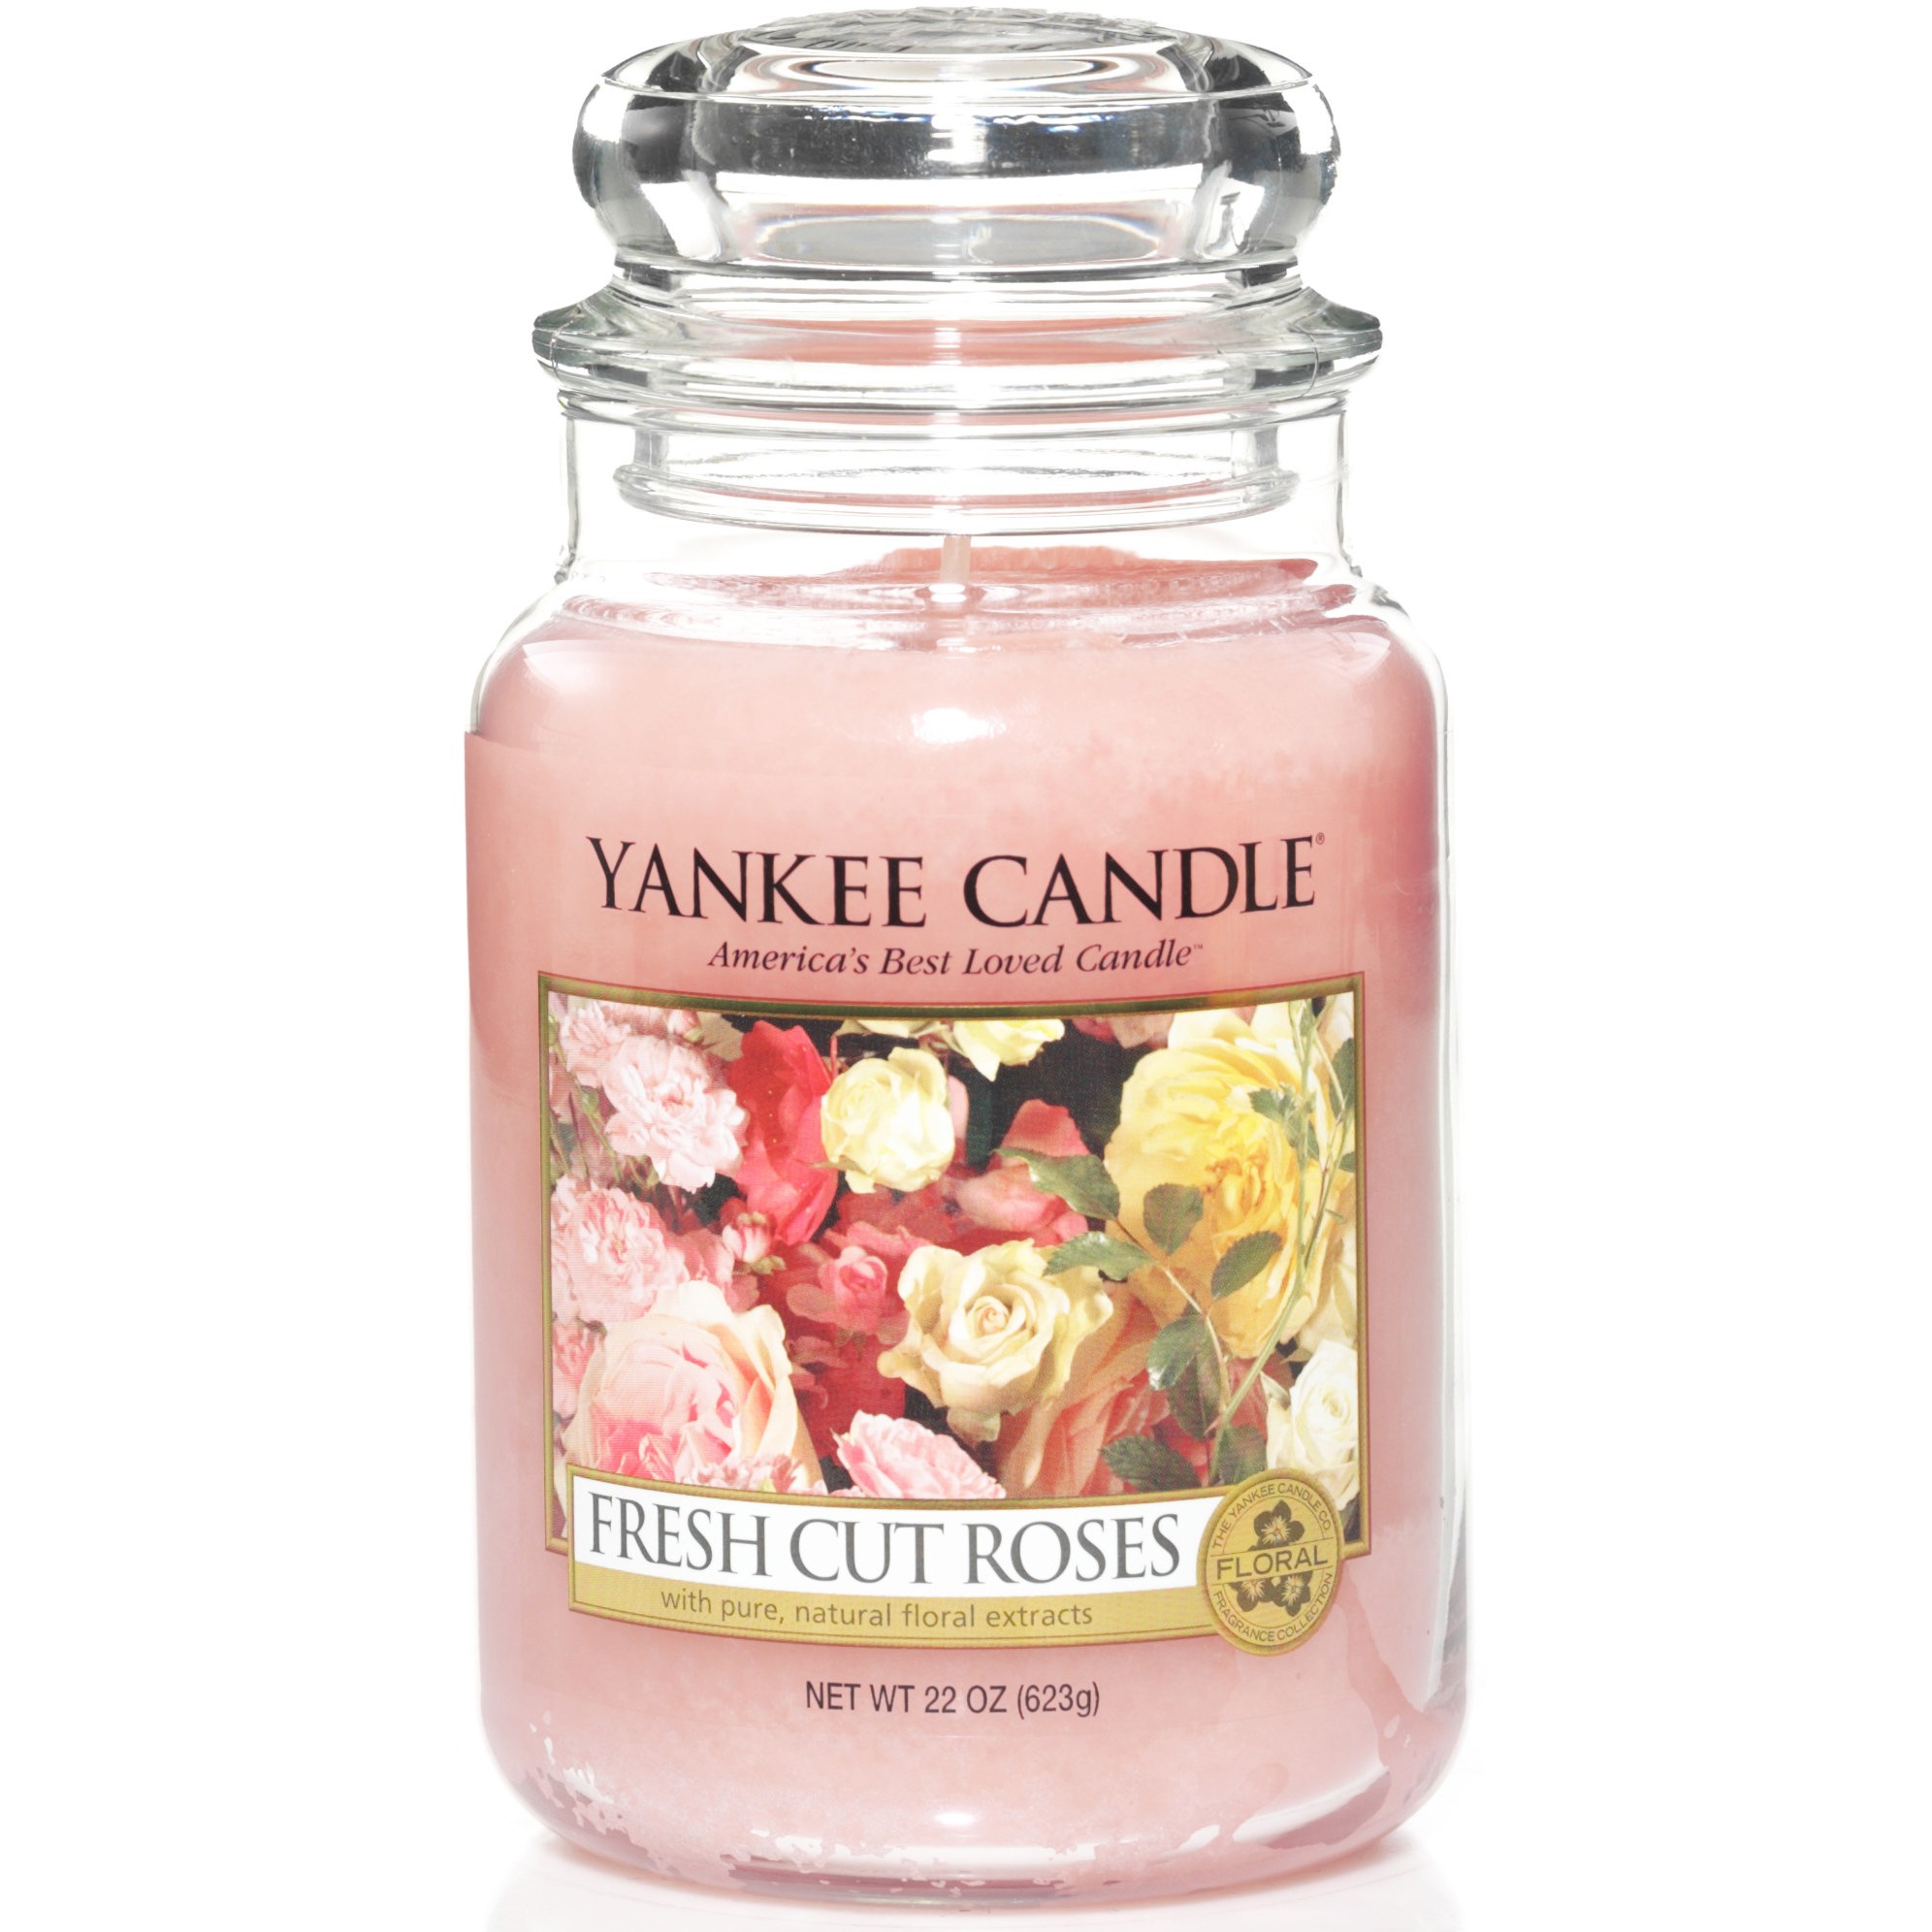 Yankee Candle Fresh Cut Roses Large Jar